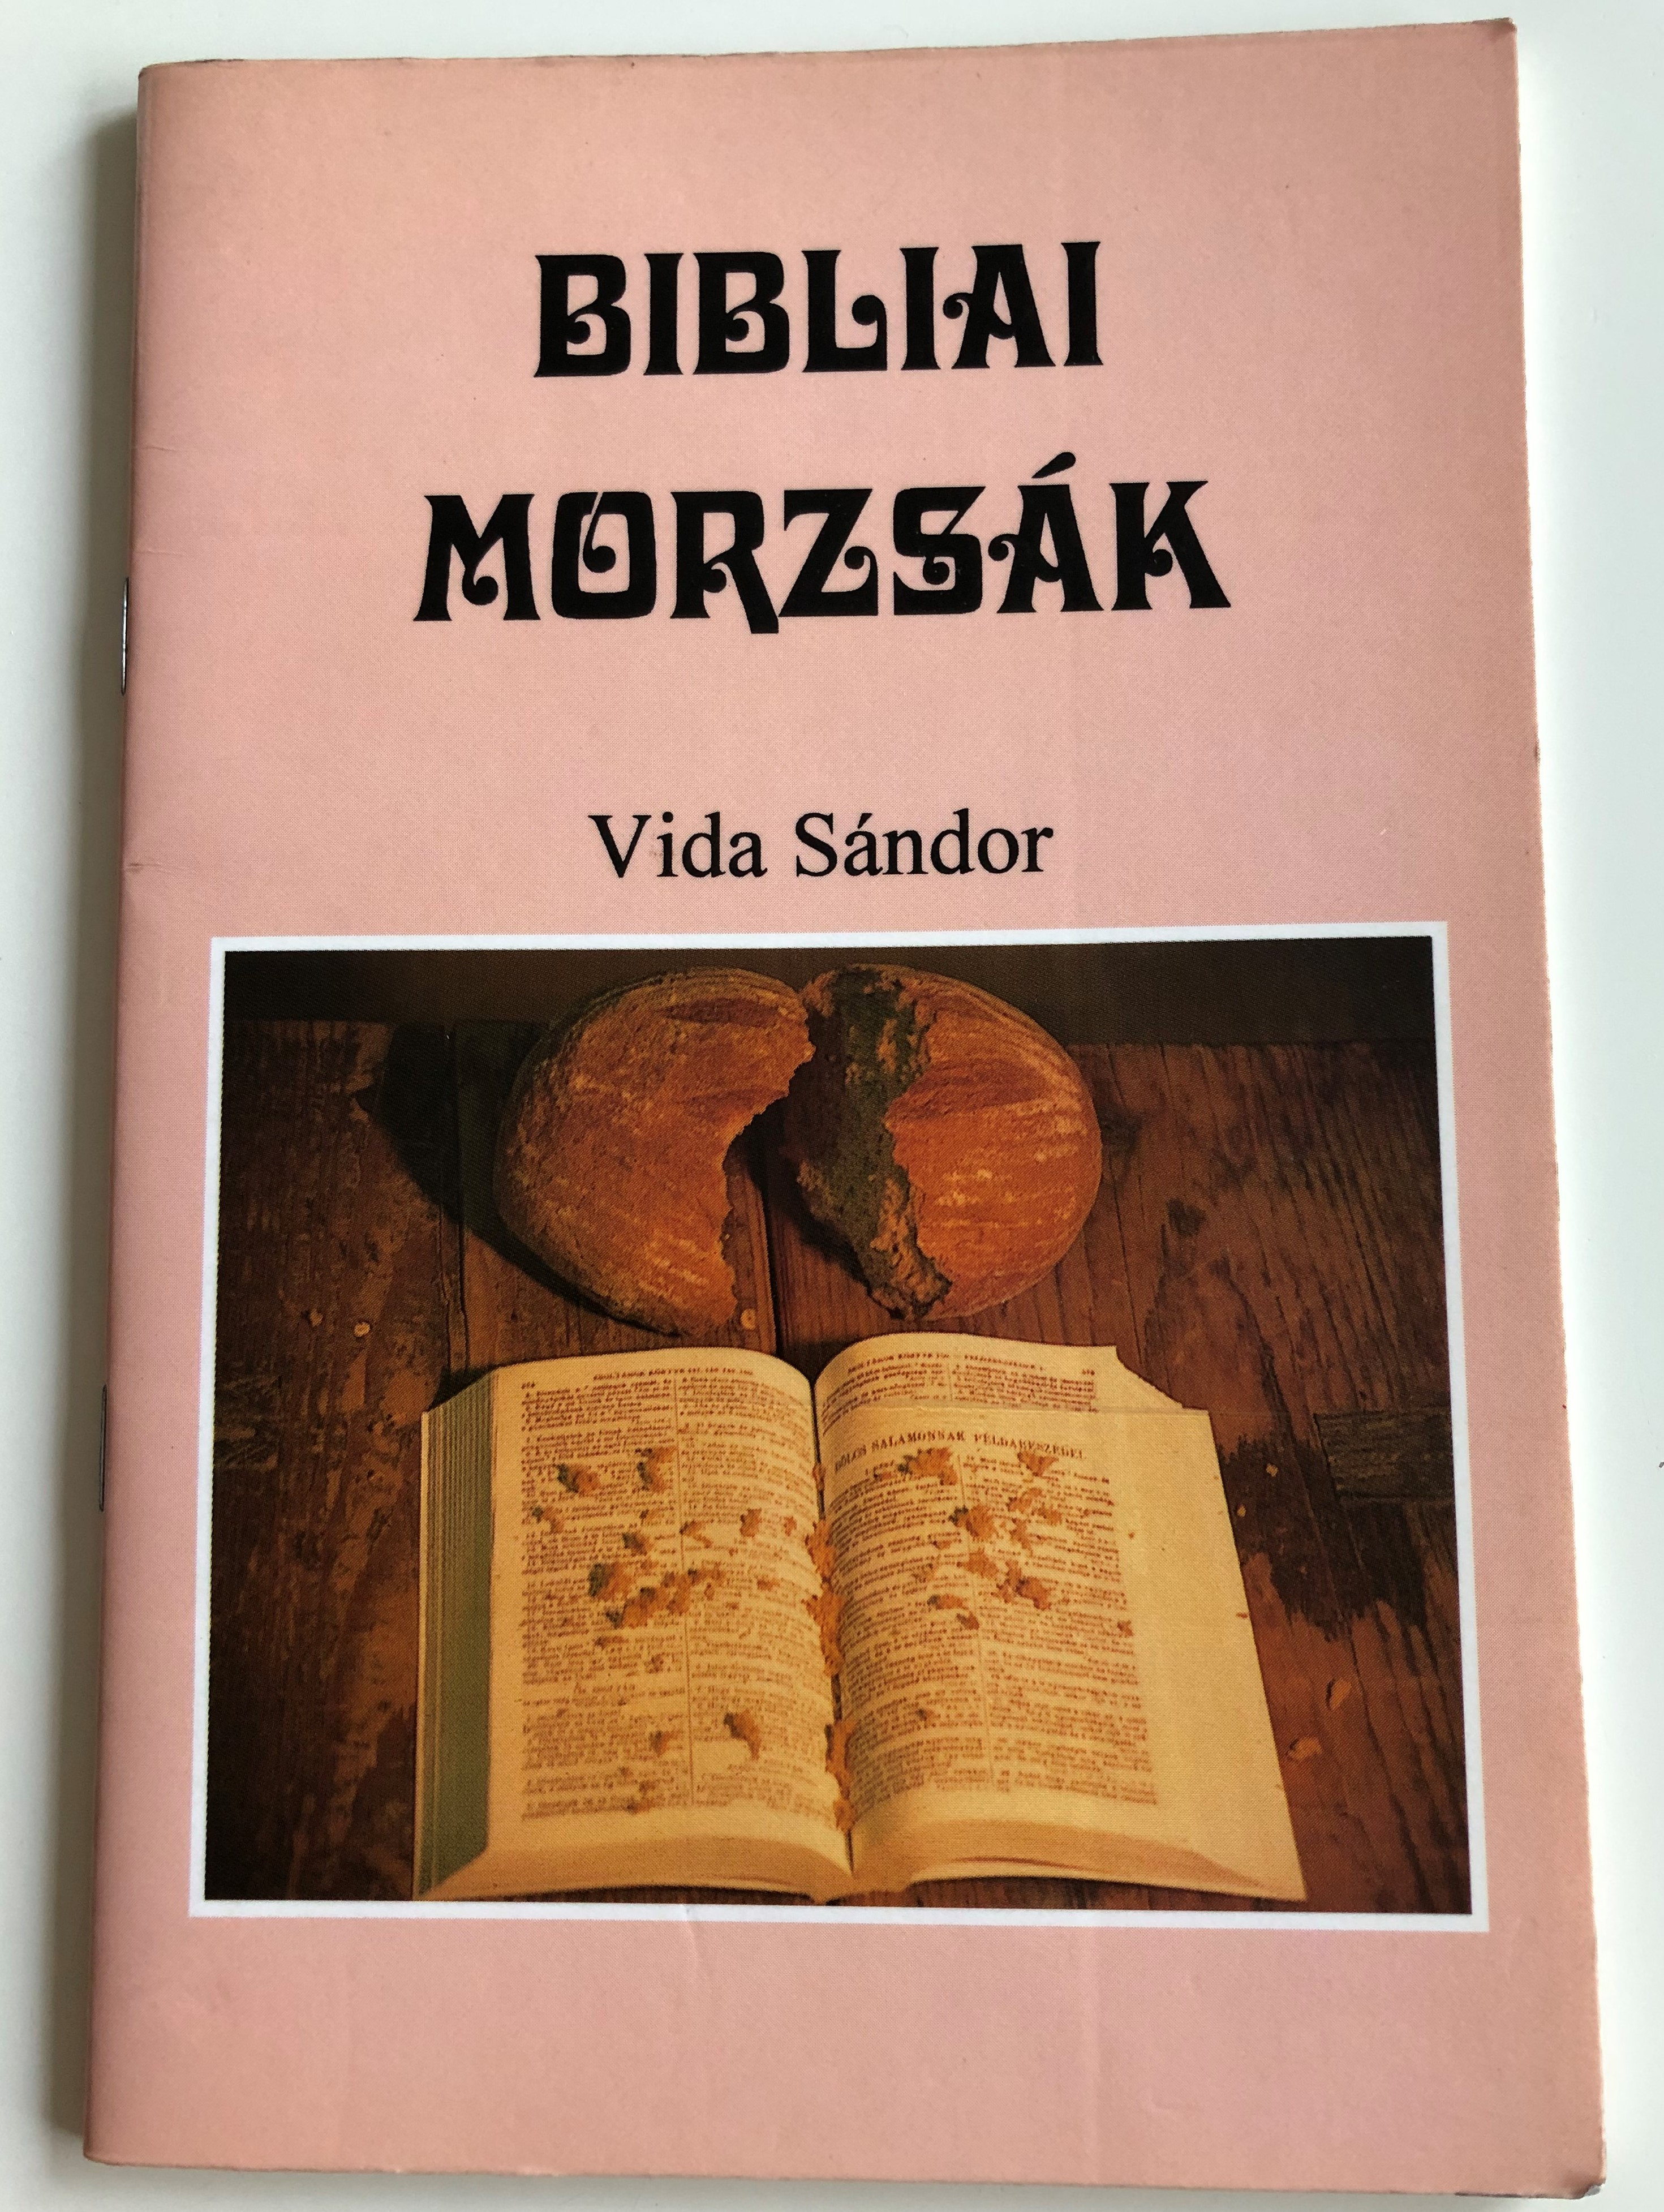 Bibliai morzsák by Vida Sándor 1